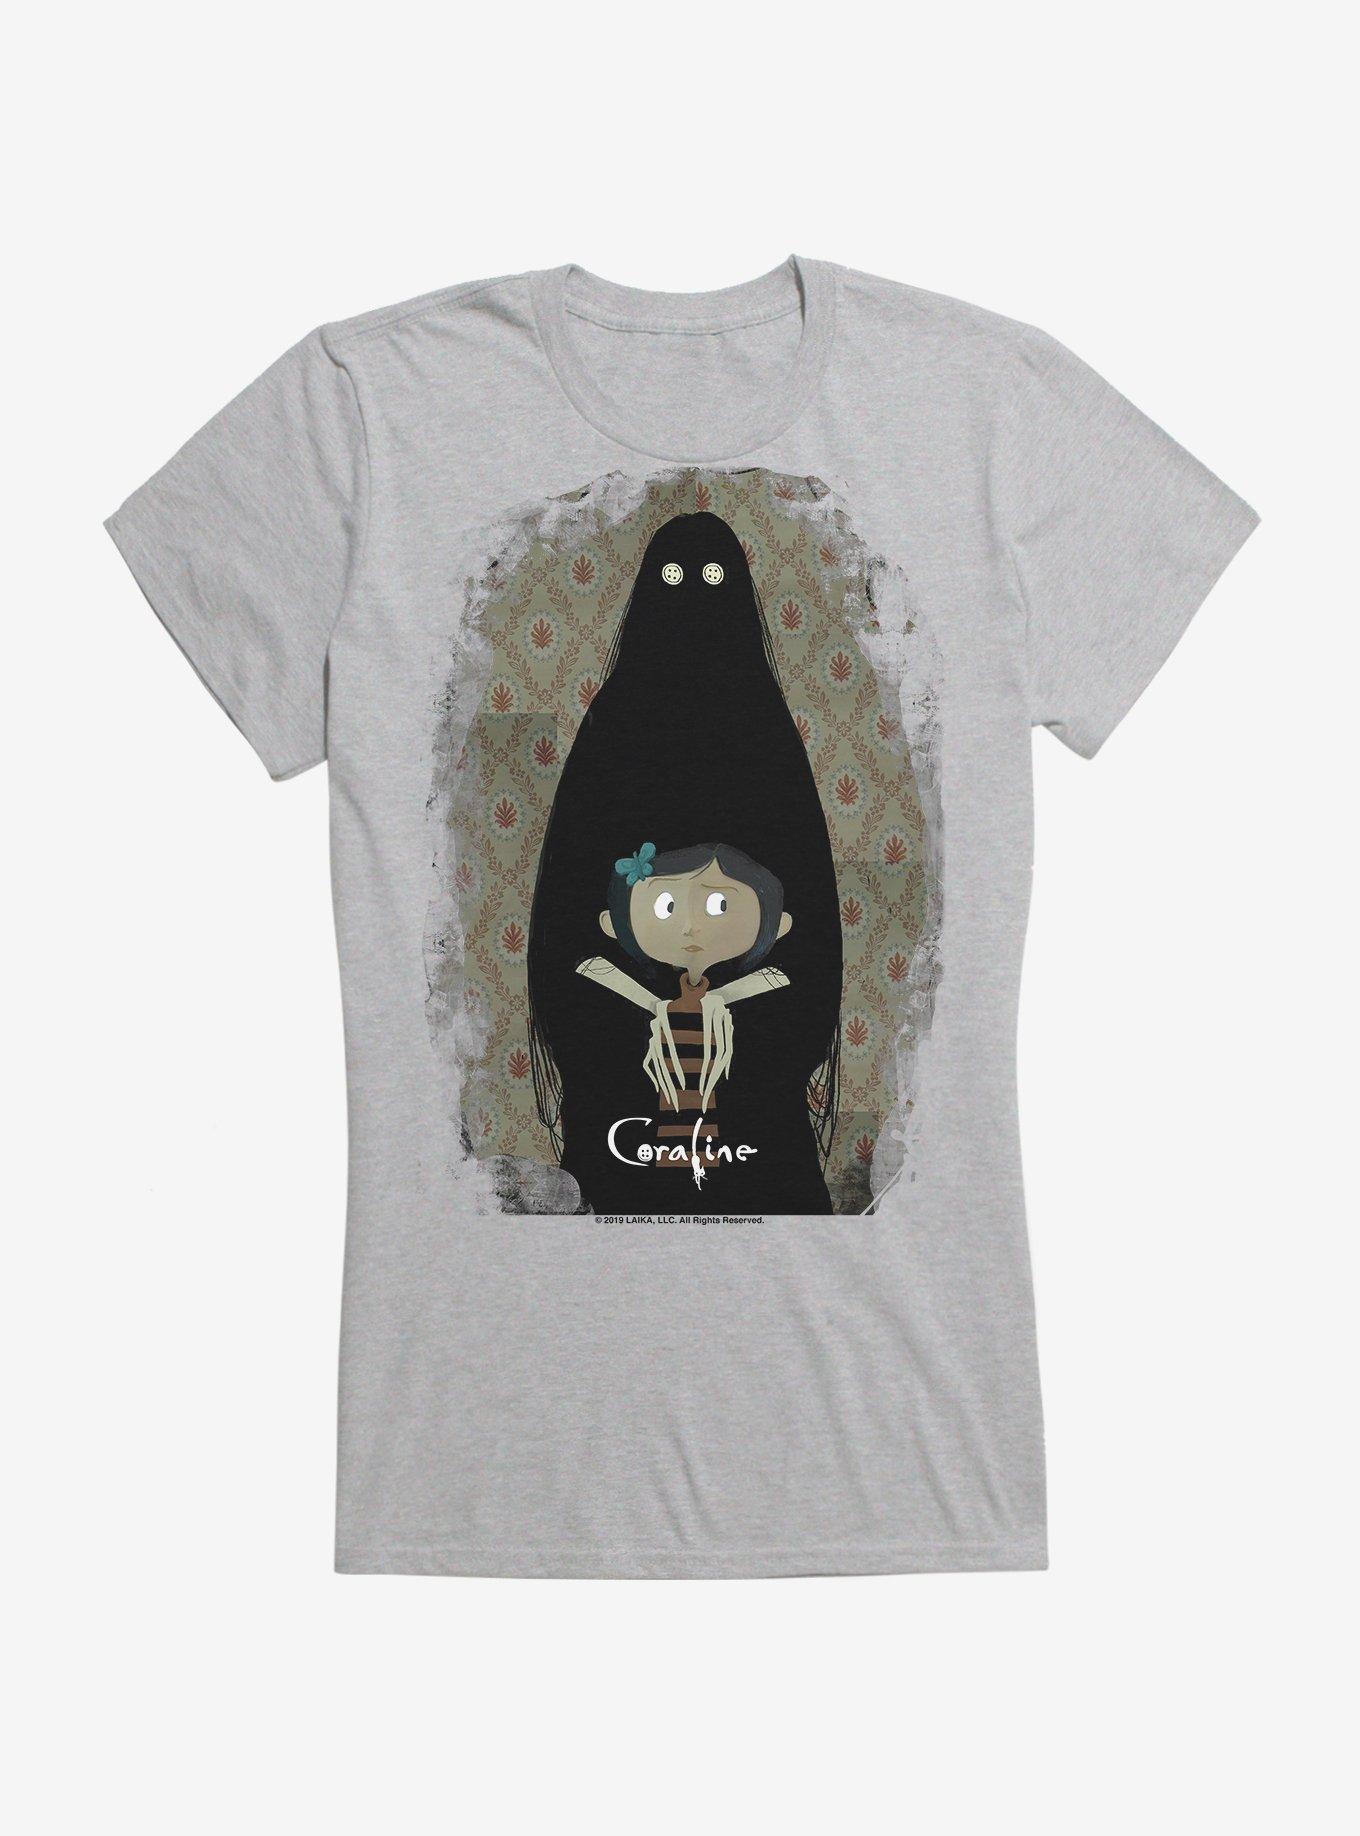 Coraline Ghost Girls T-Shirt, HEATHER, hi-res